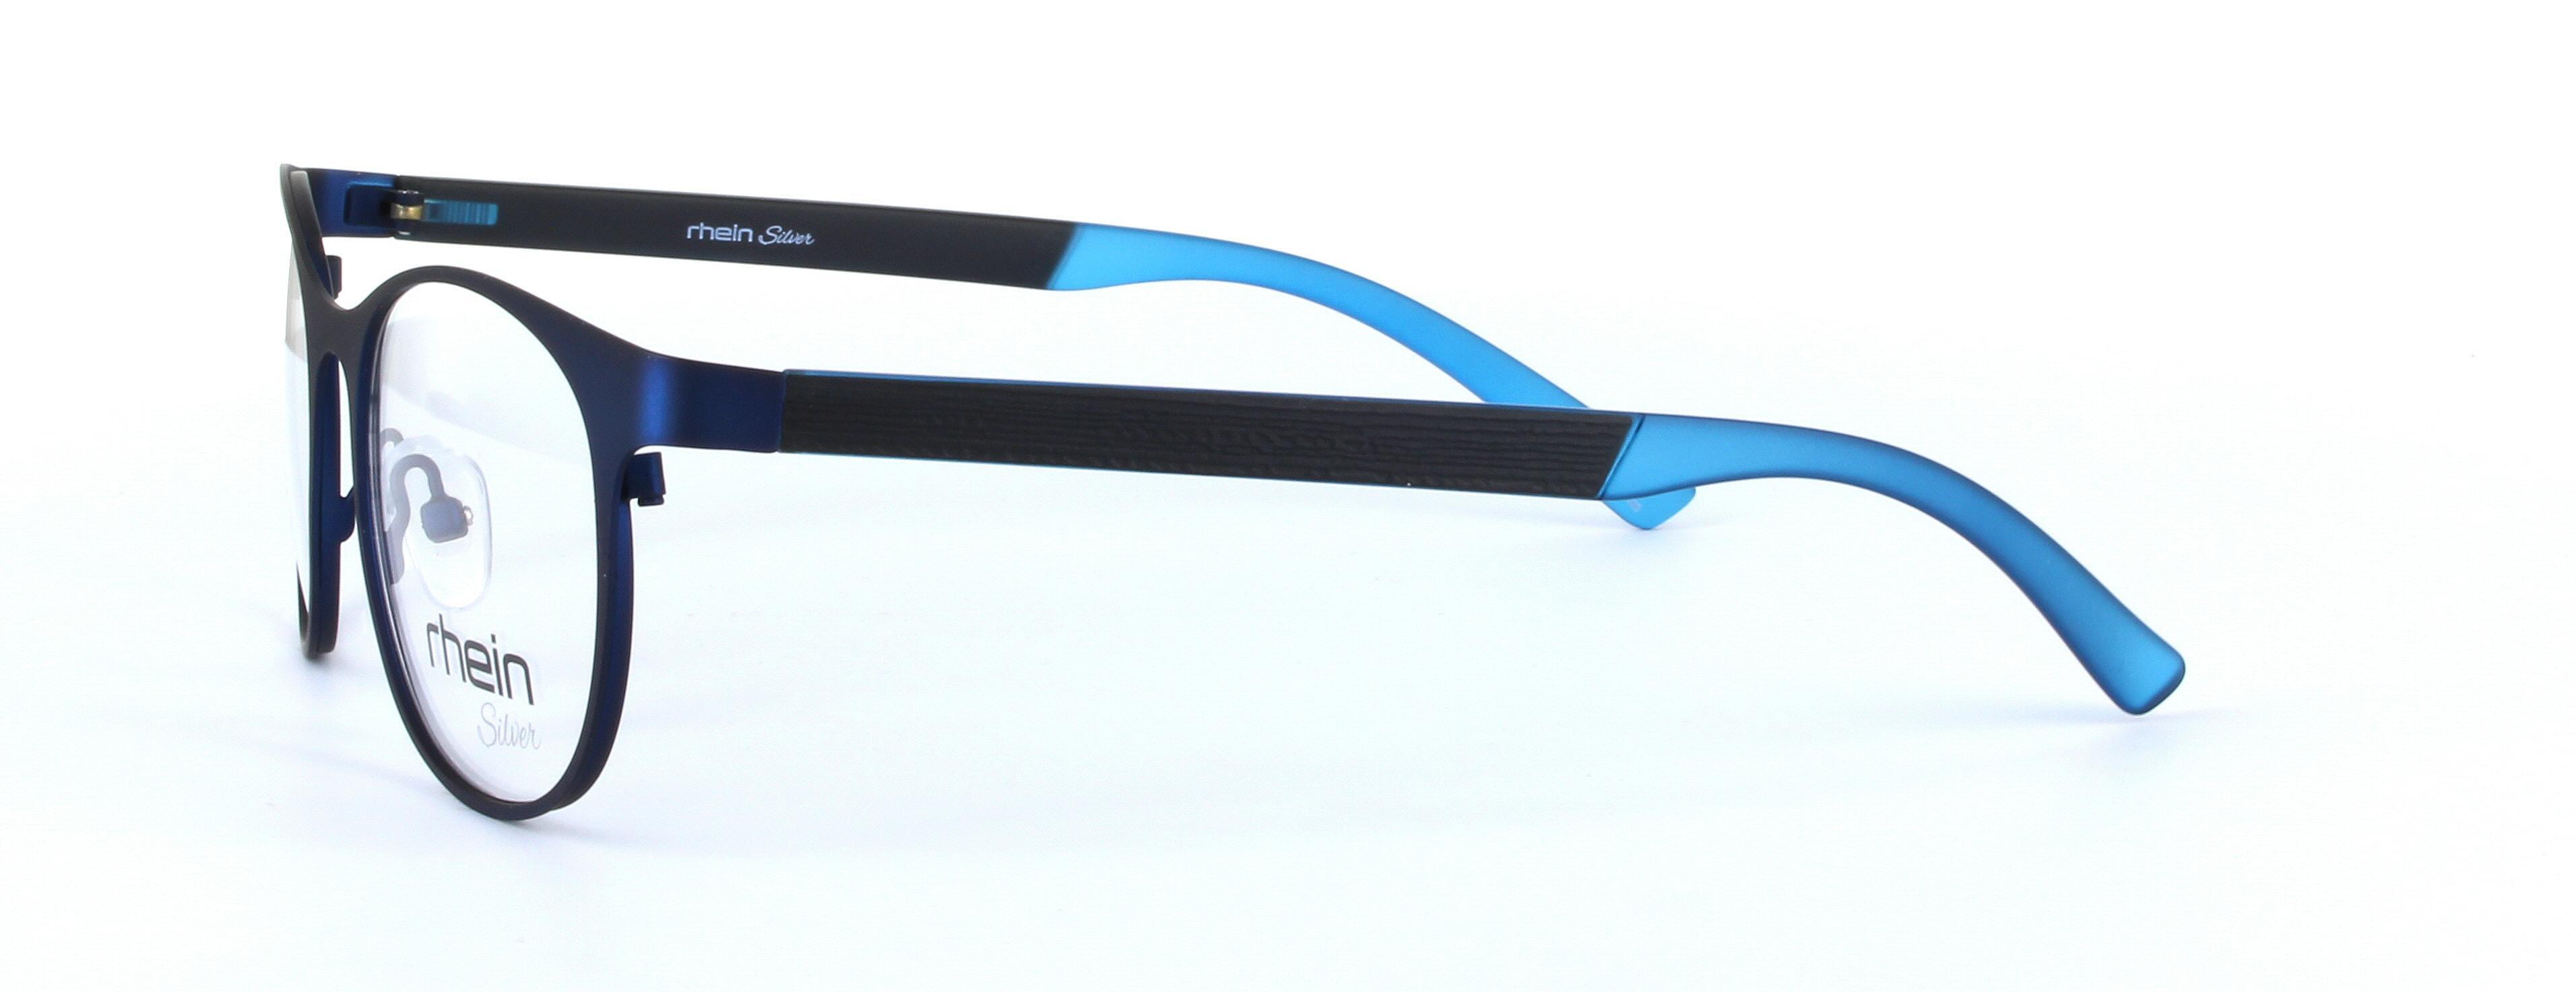 Isra Blue Full Rim Round Metal Glasses - Image View 2